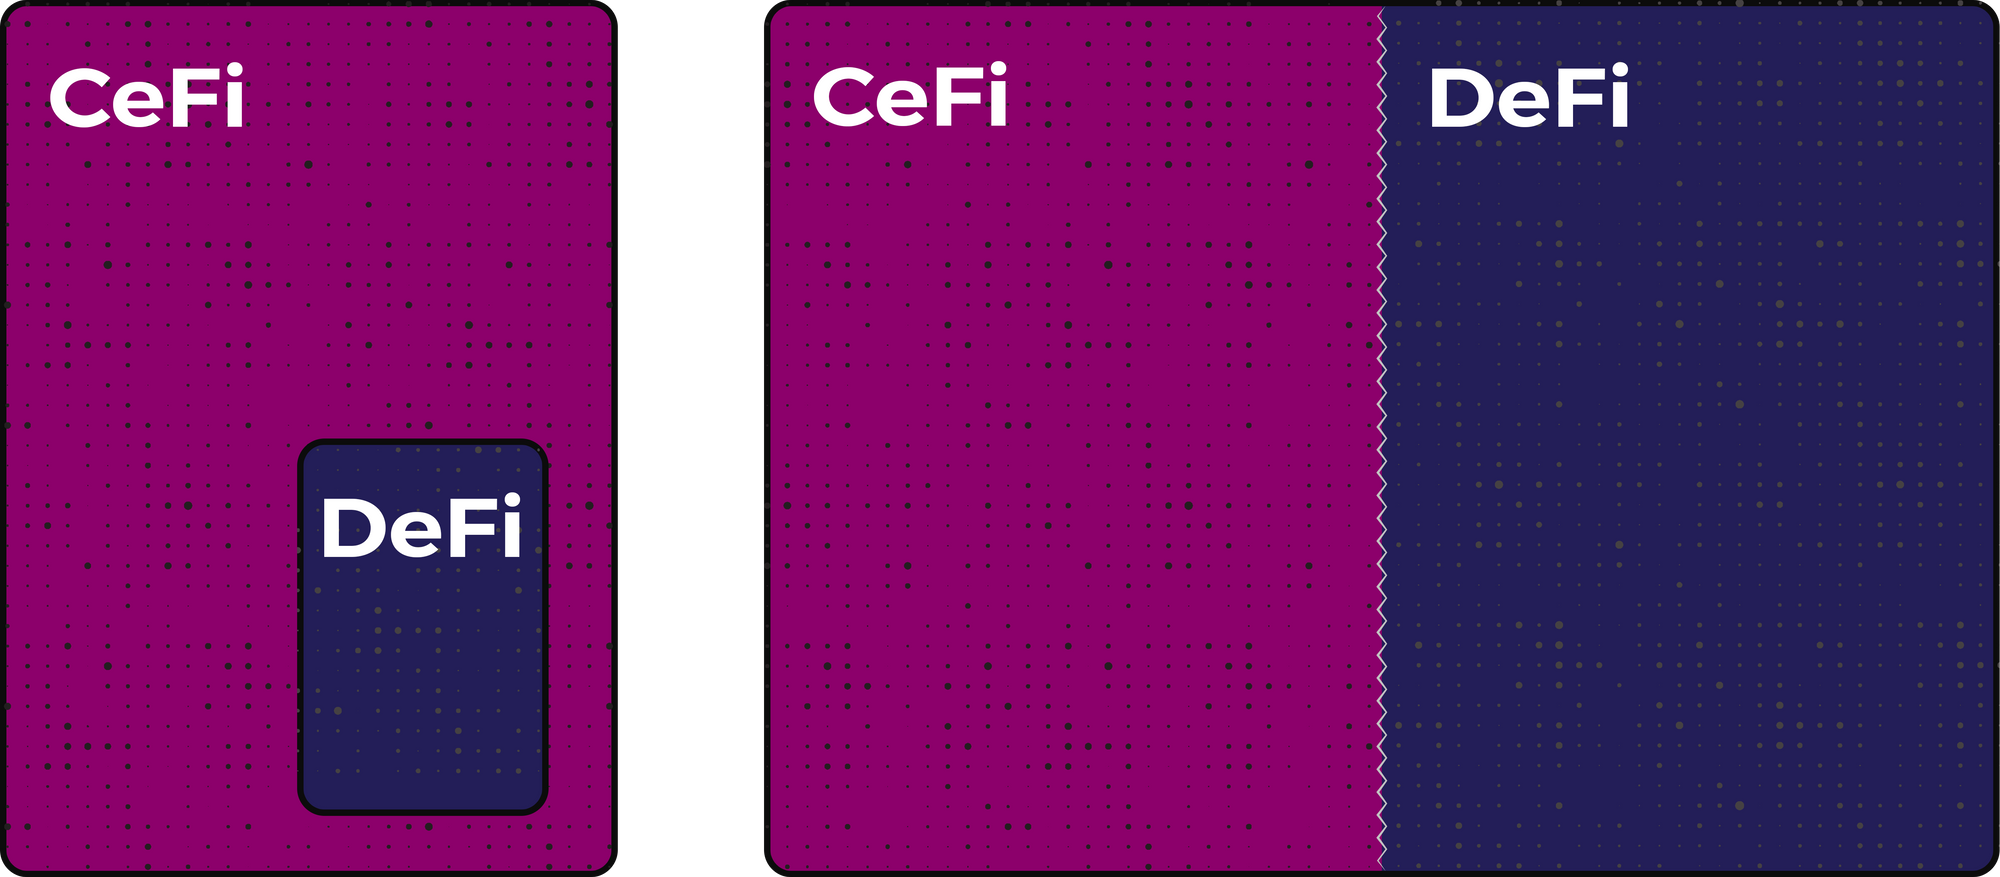 CeFi encompassing DeFi, and CeFi/DeFi existing side-by-side